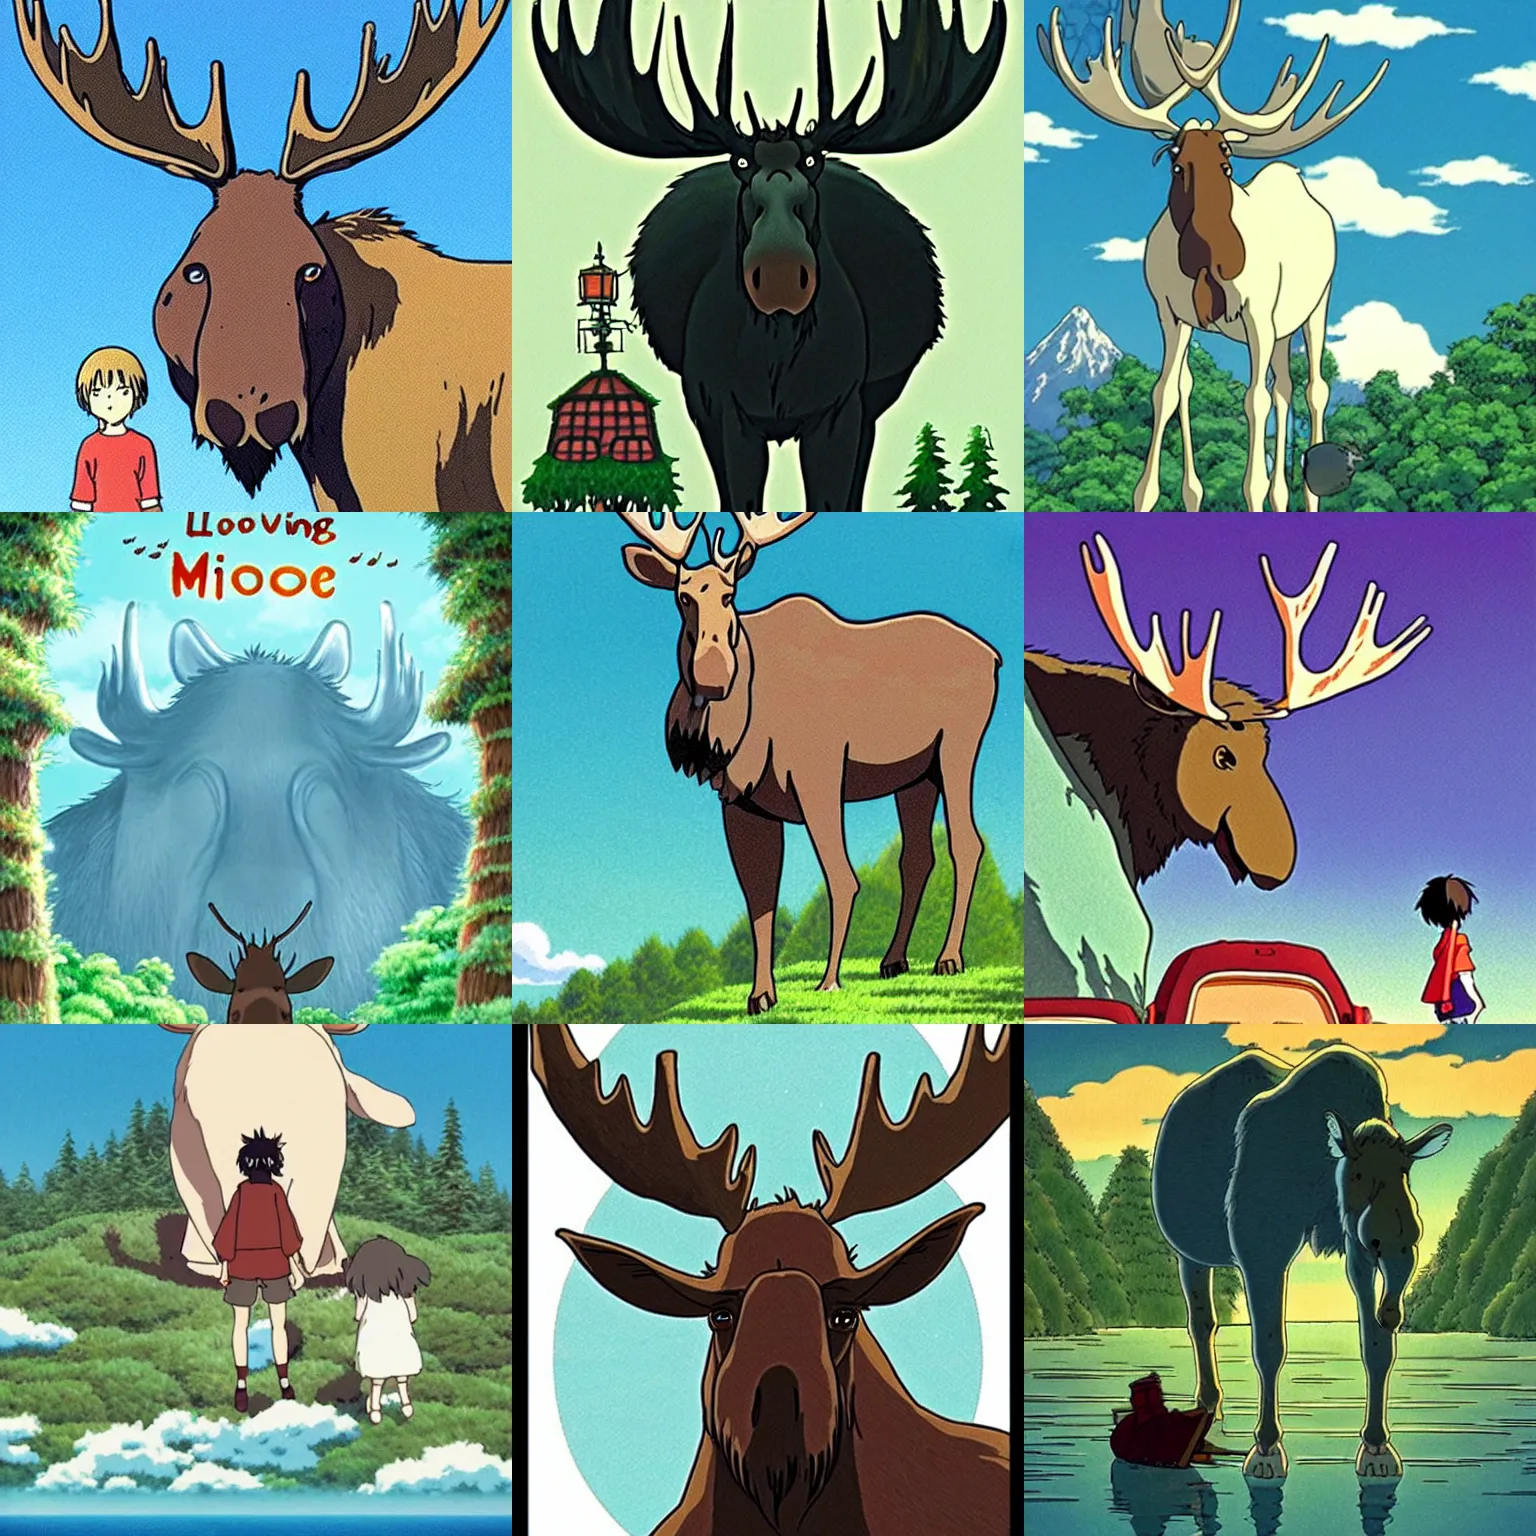 Prompt: Loving Moose God by Studio Ghibli, award-winning art, Spirited Away